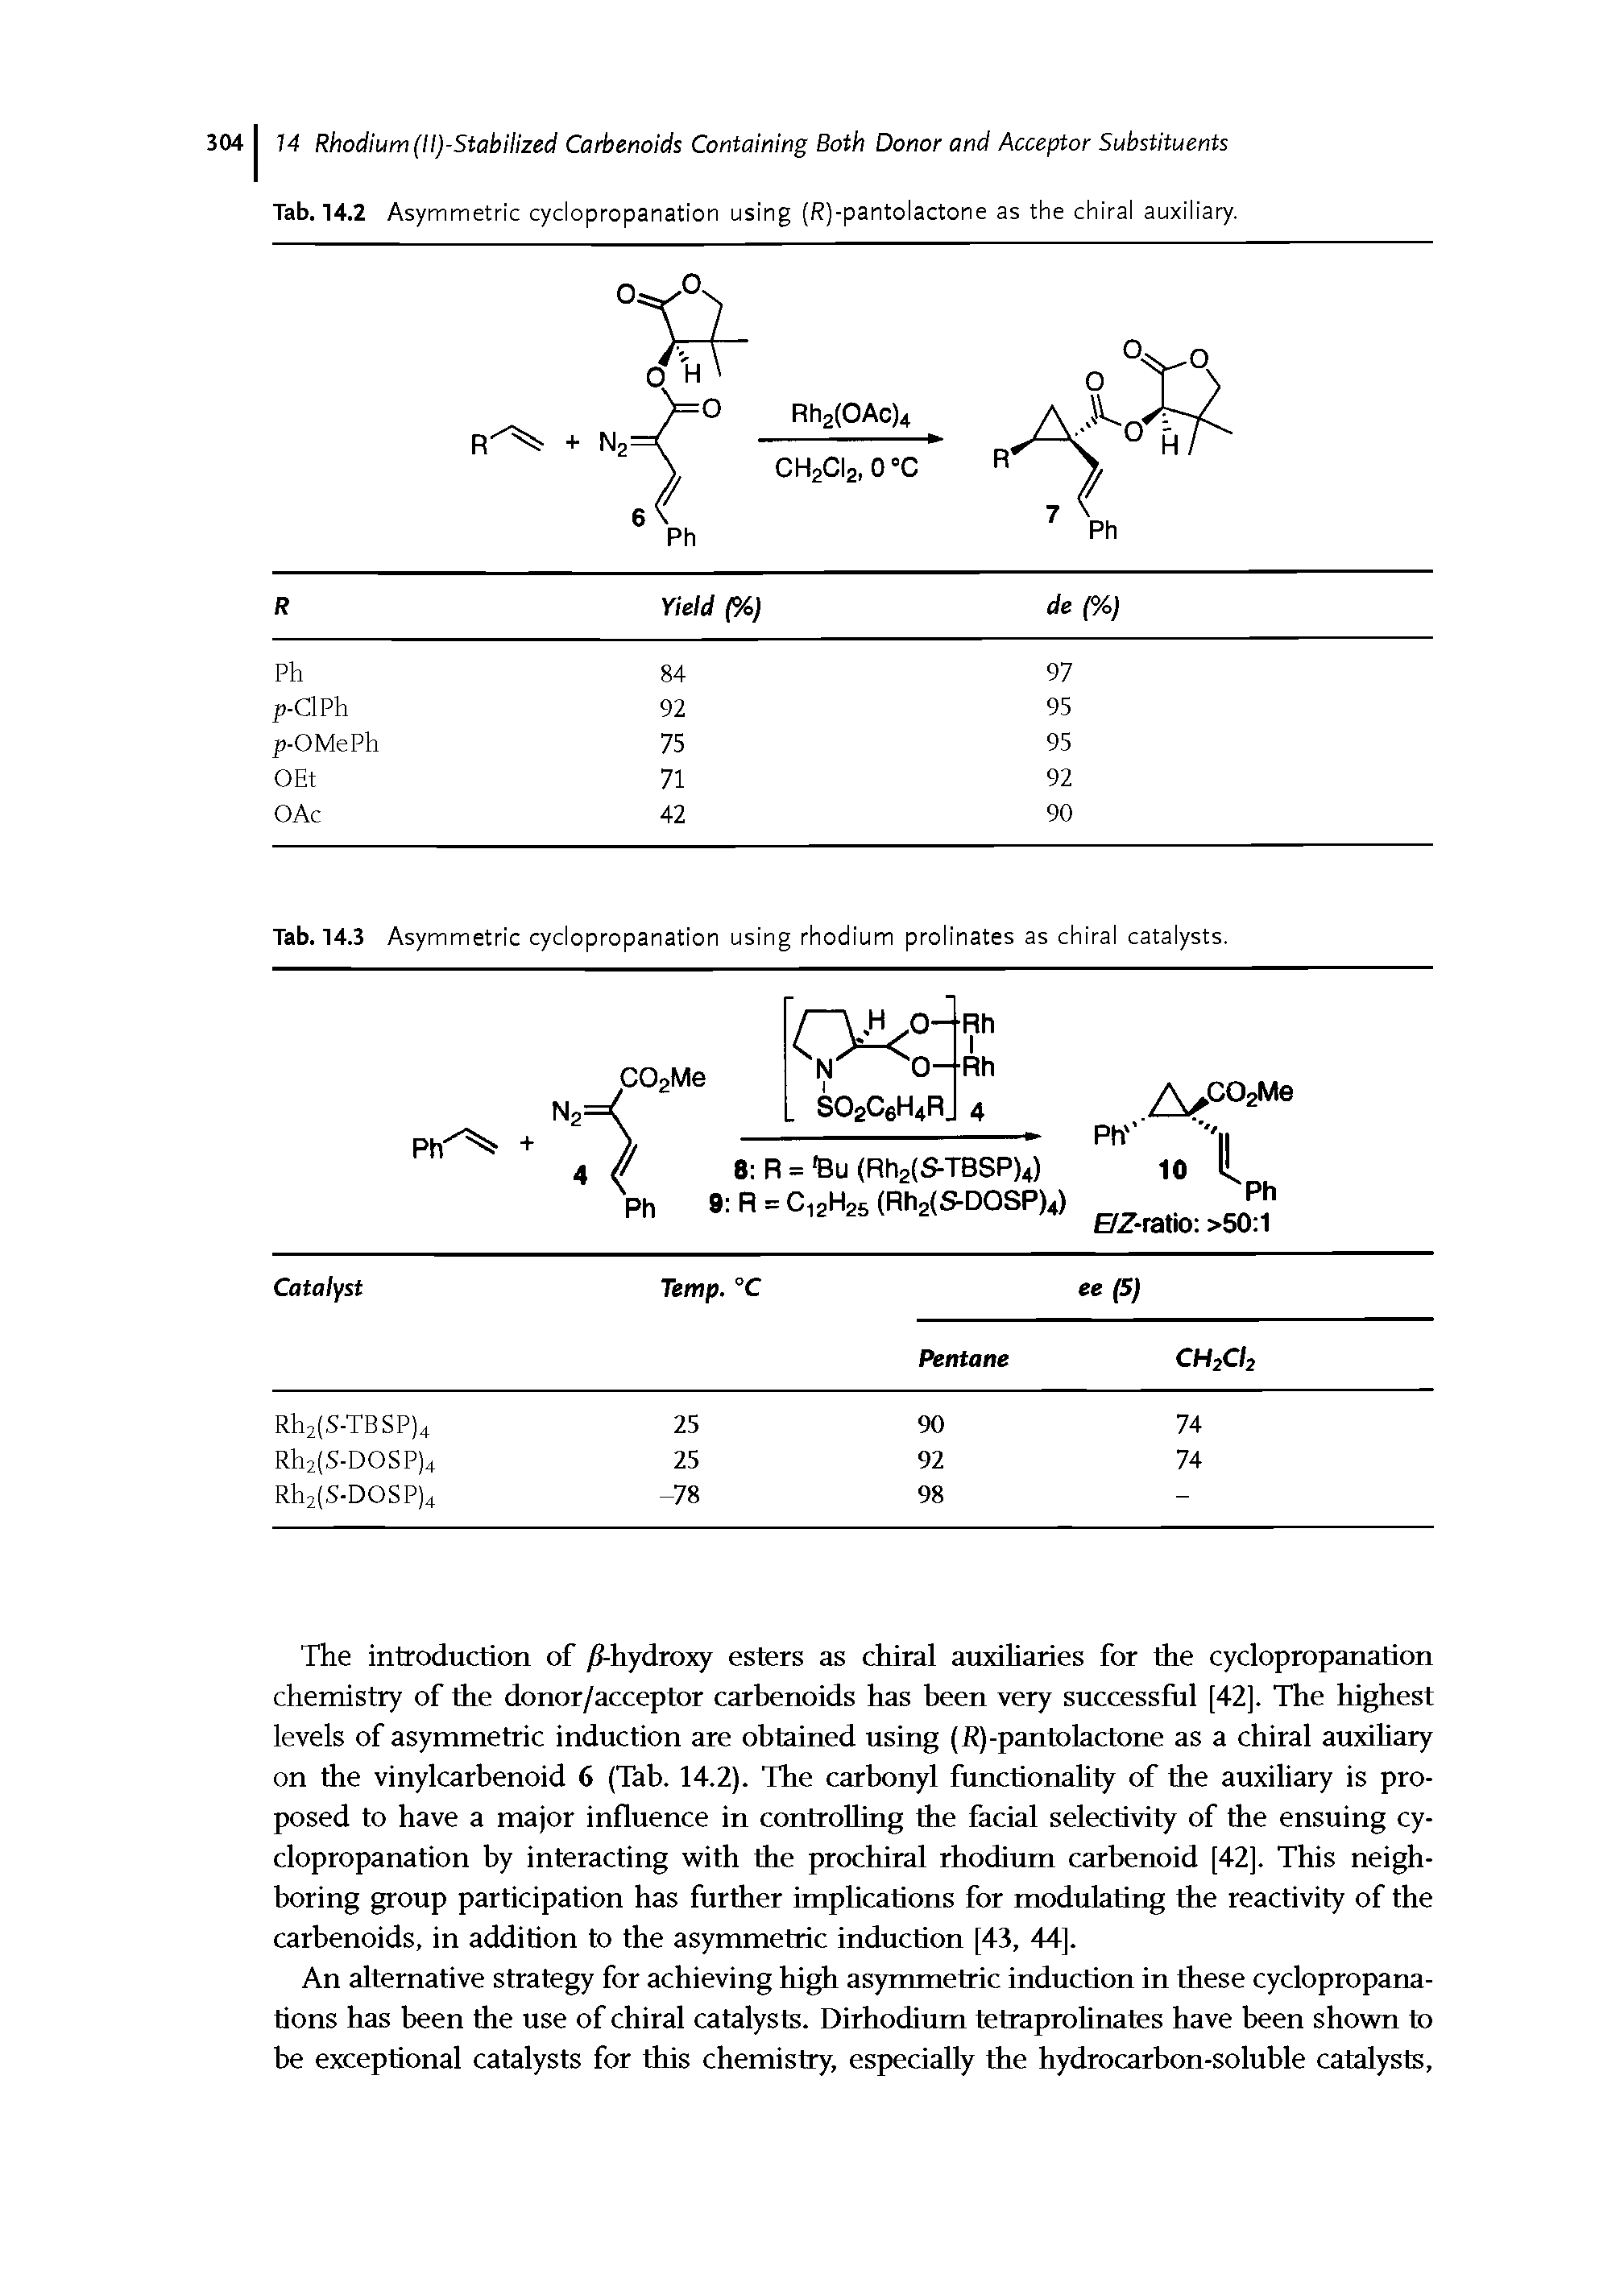 Tab. 14.3 Asymmetric cyclopropanation using rhodium prolinates as chiral catalysts.